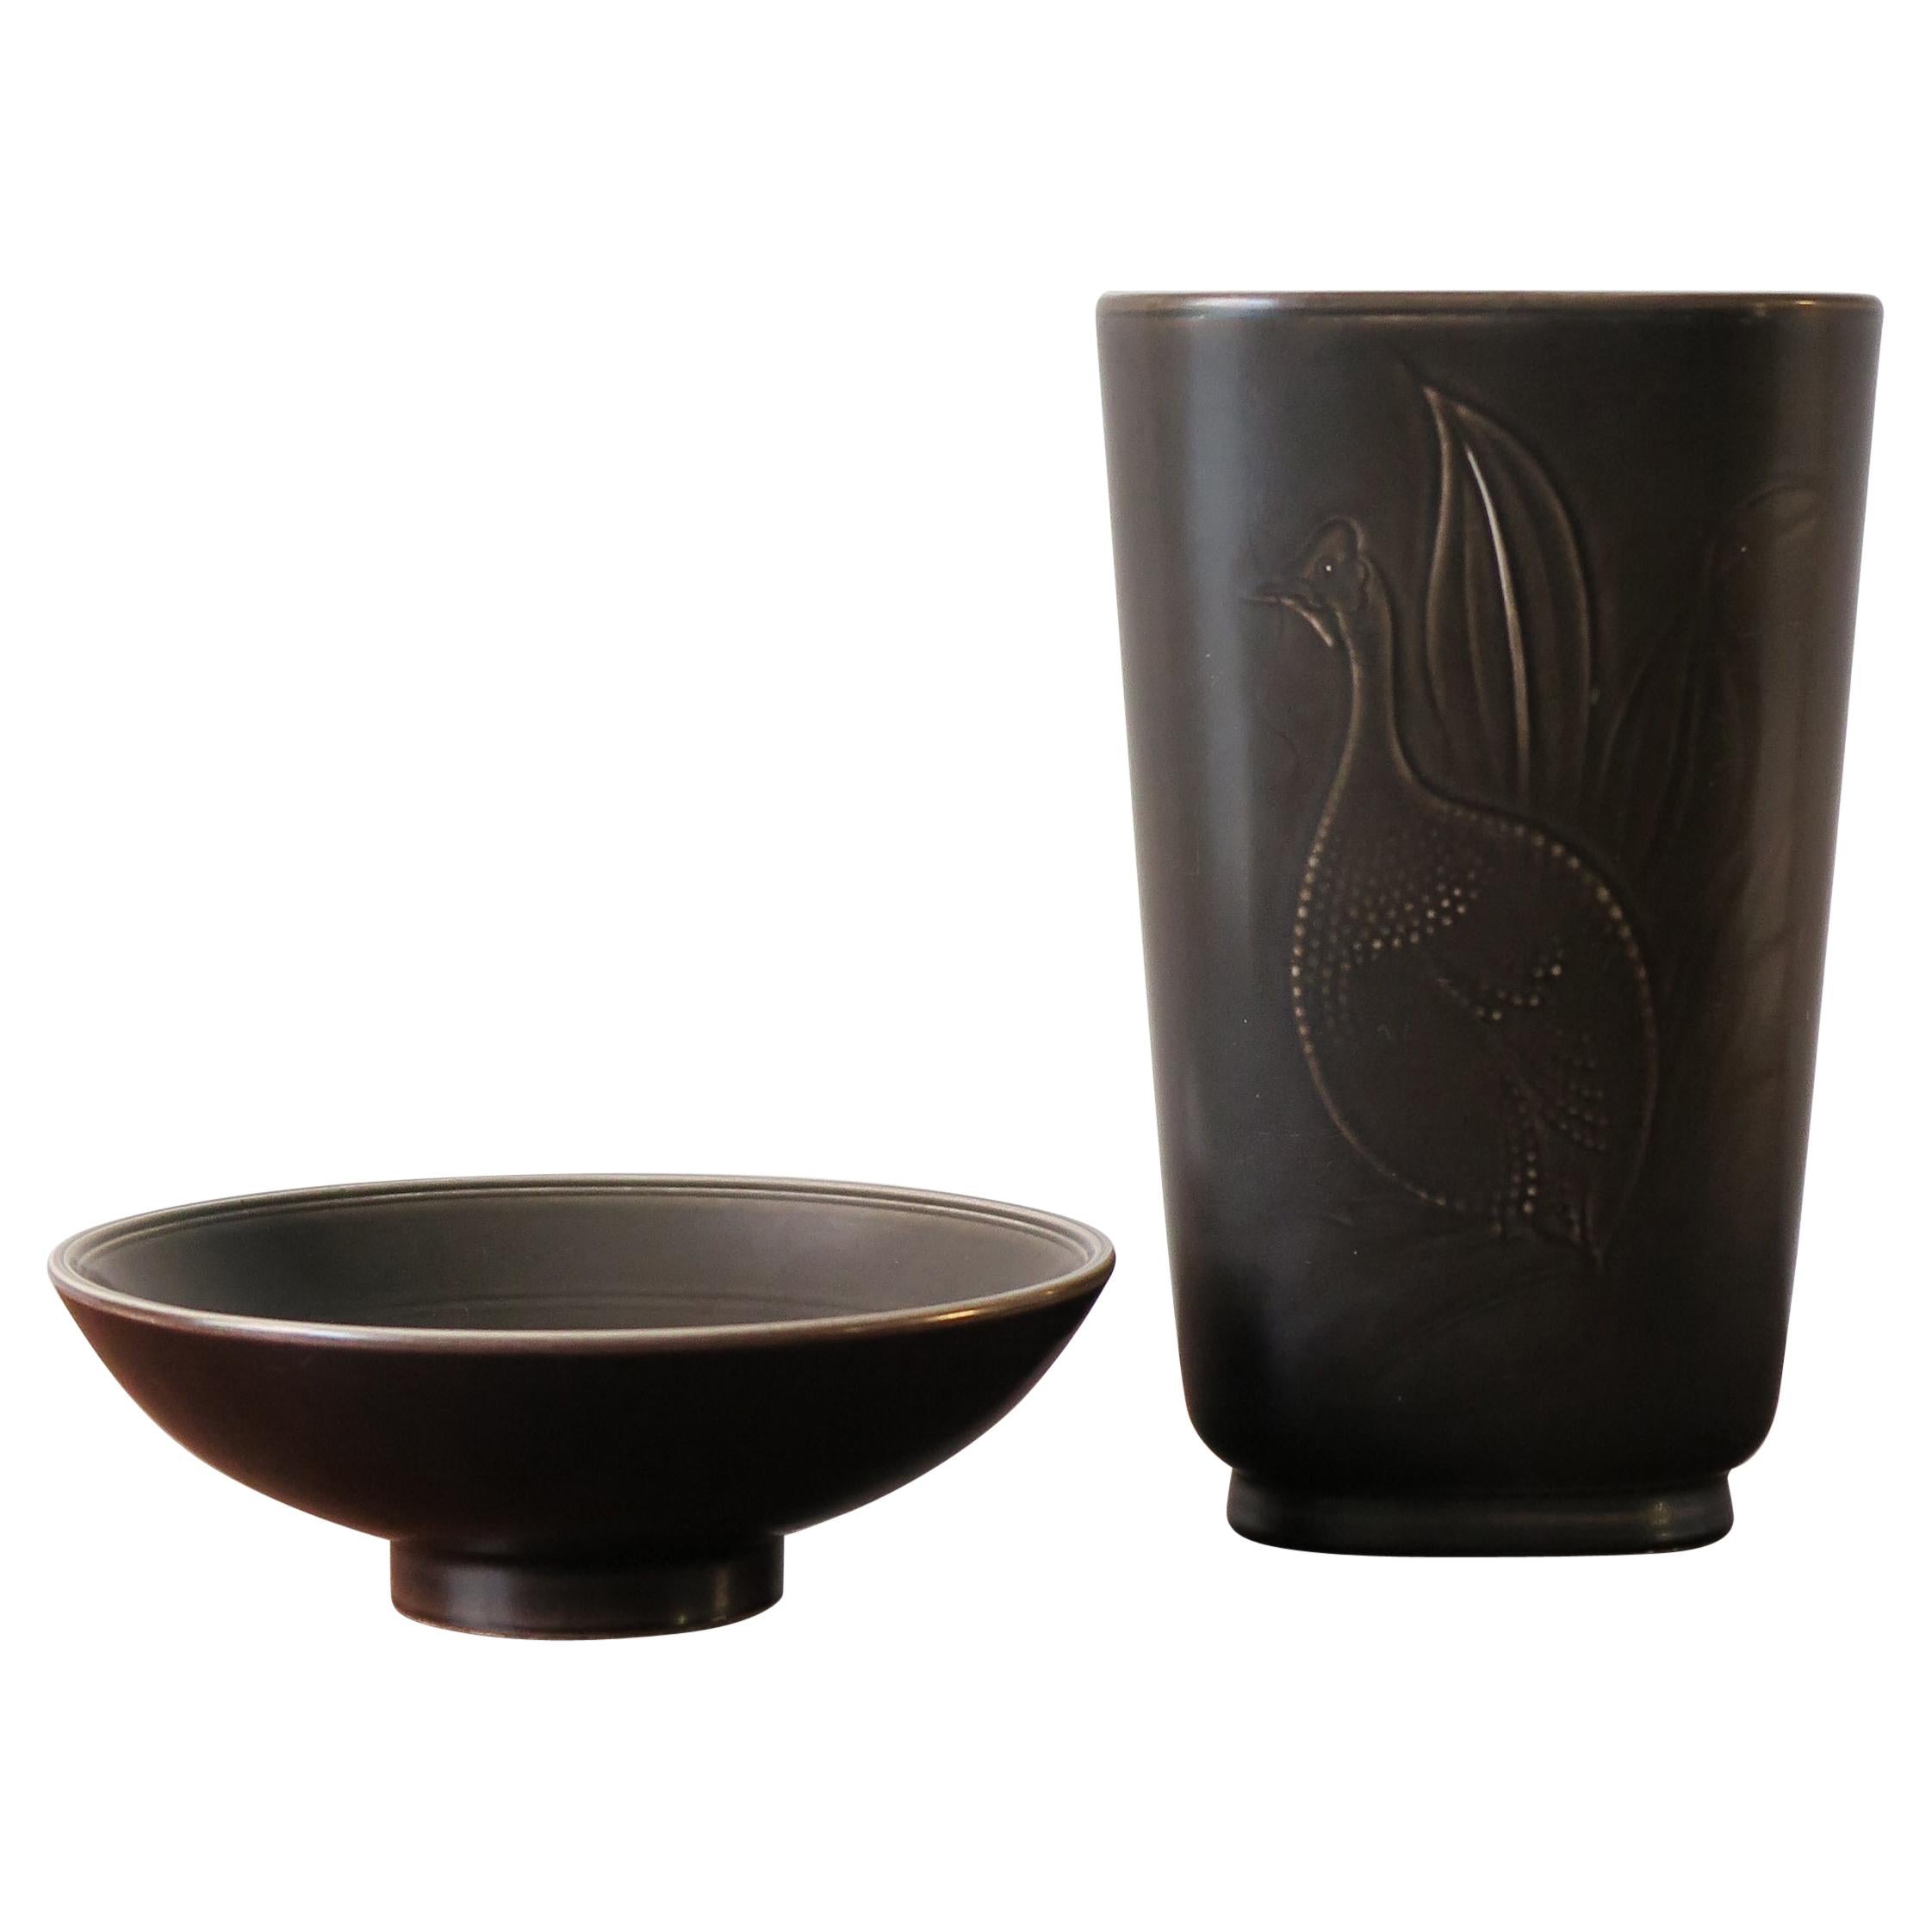 Royal Copenaghen Scandinavian Midcentury Ceramic Vase and Bowl Set, 1950s For Sale